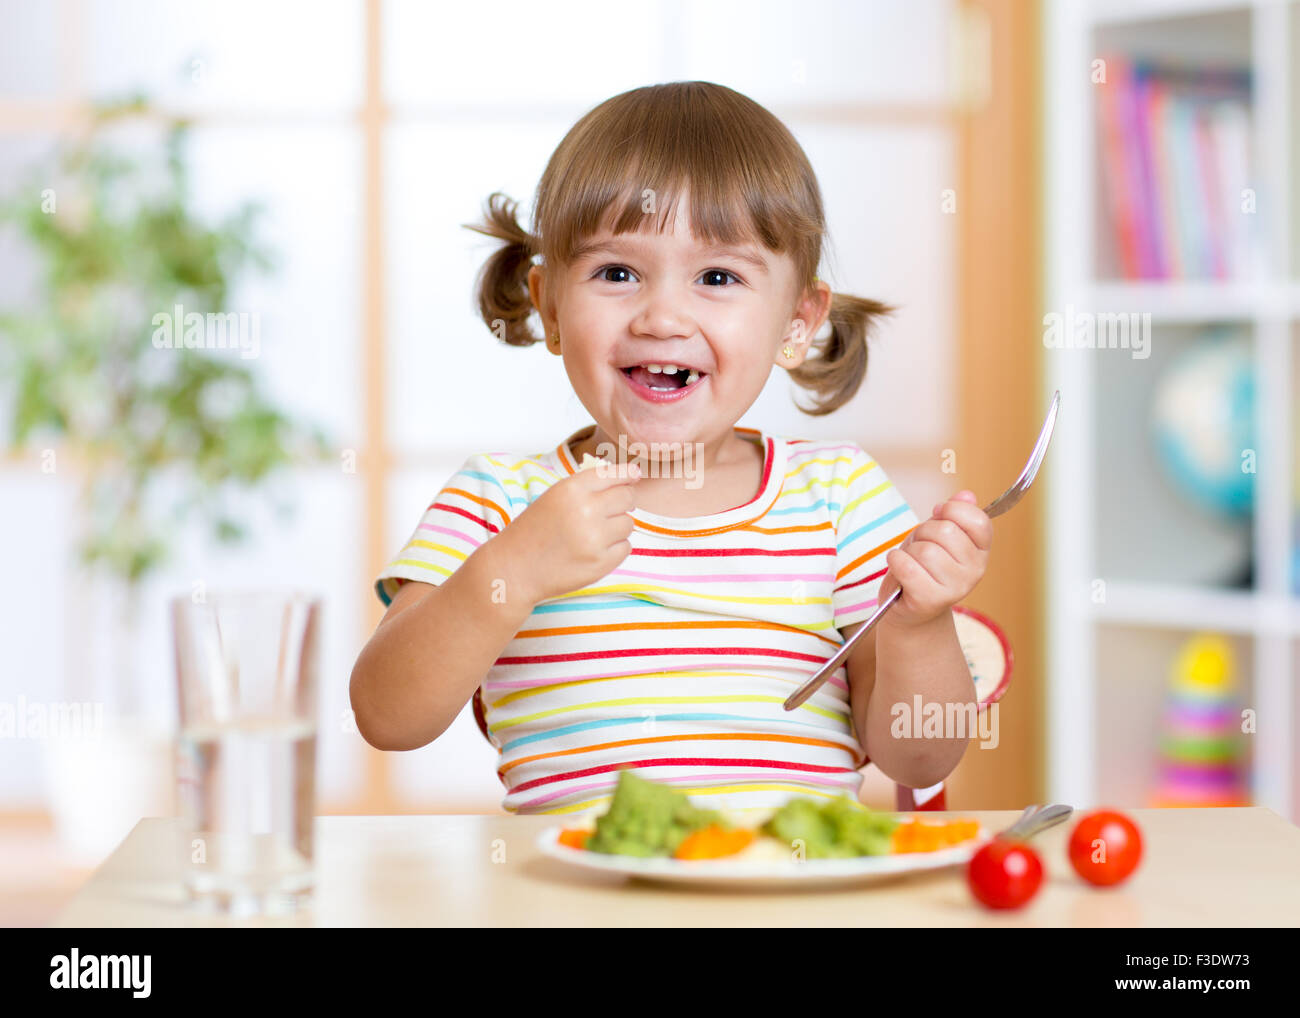 kid girl eating healthy vegetables Stock Photo